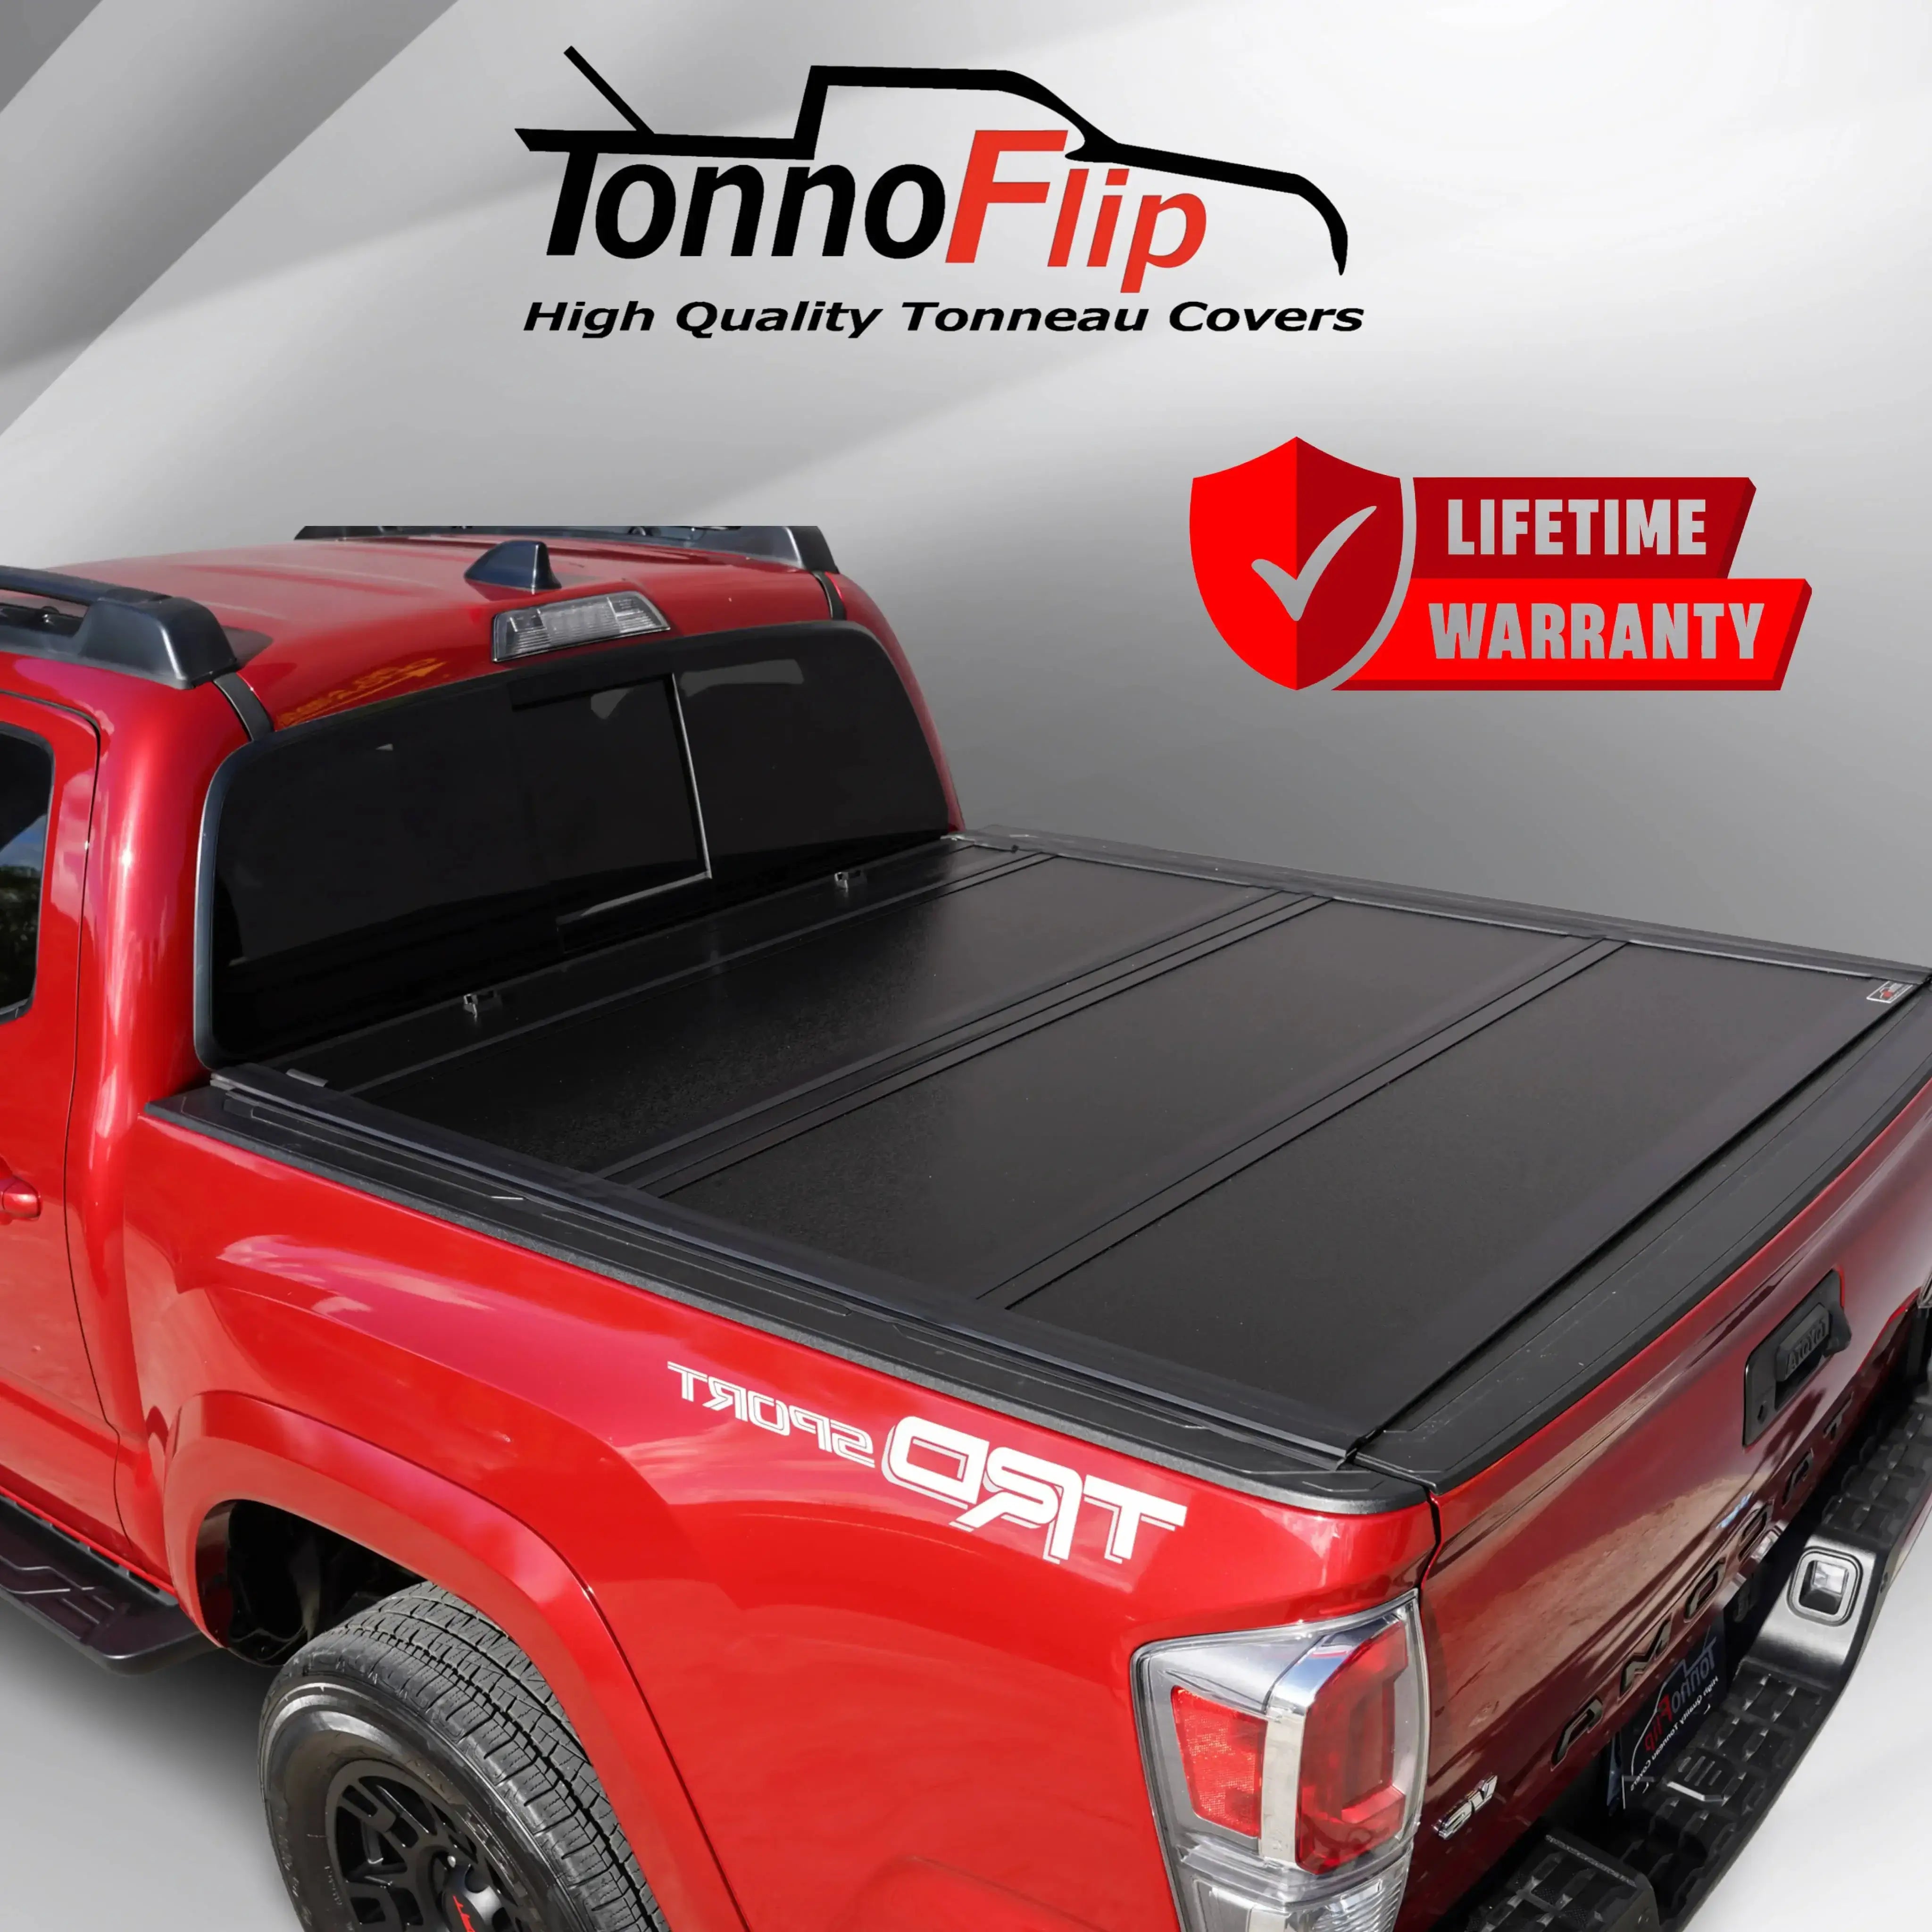 TonnoFlip lifetime warranty